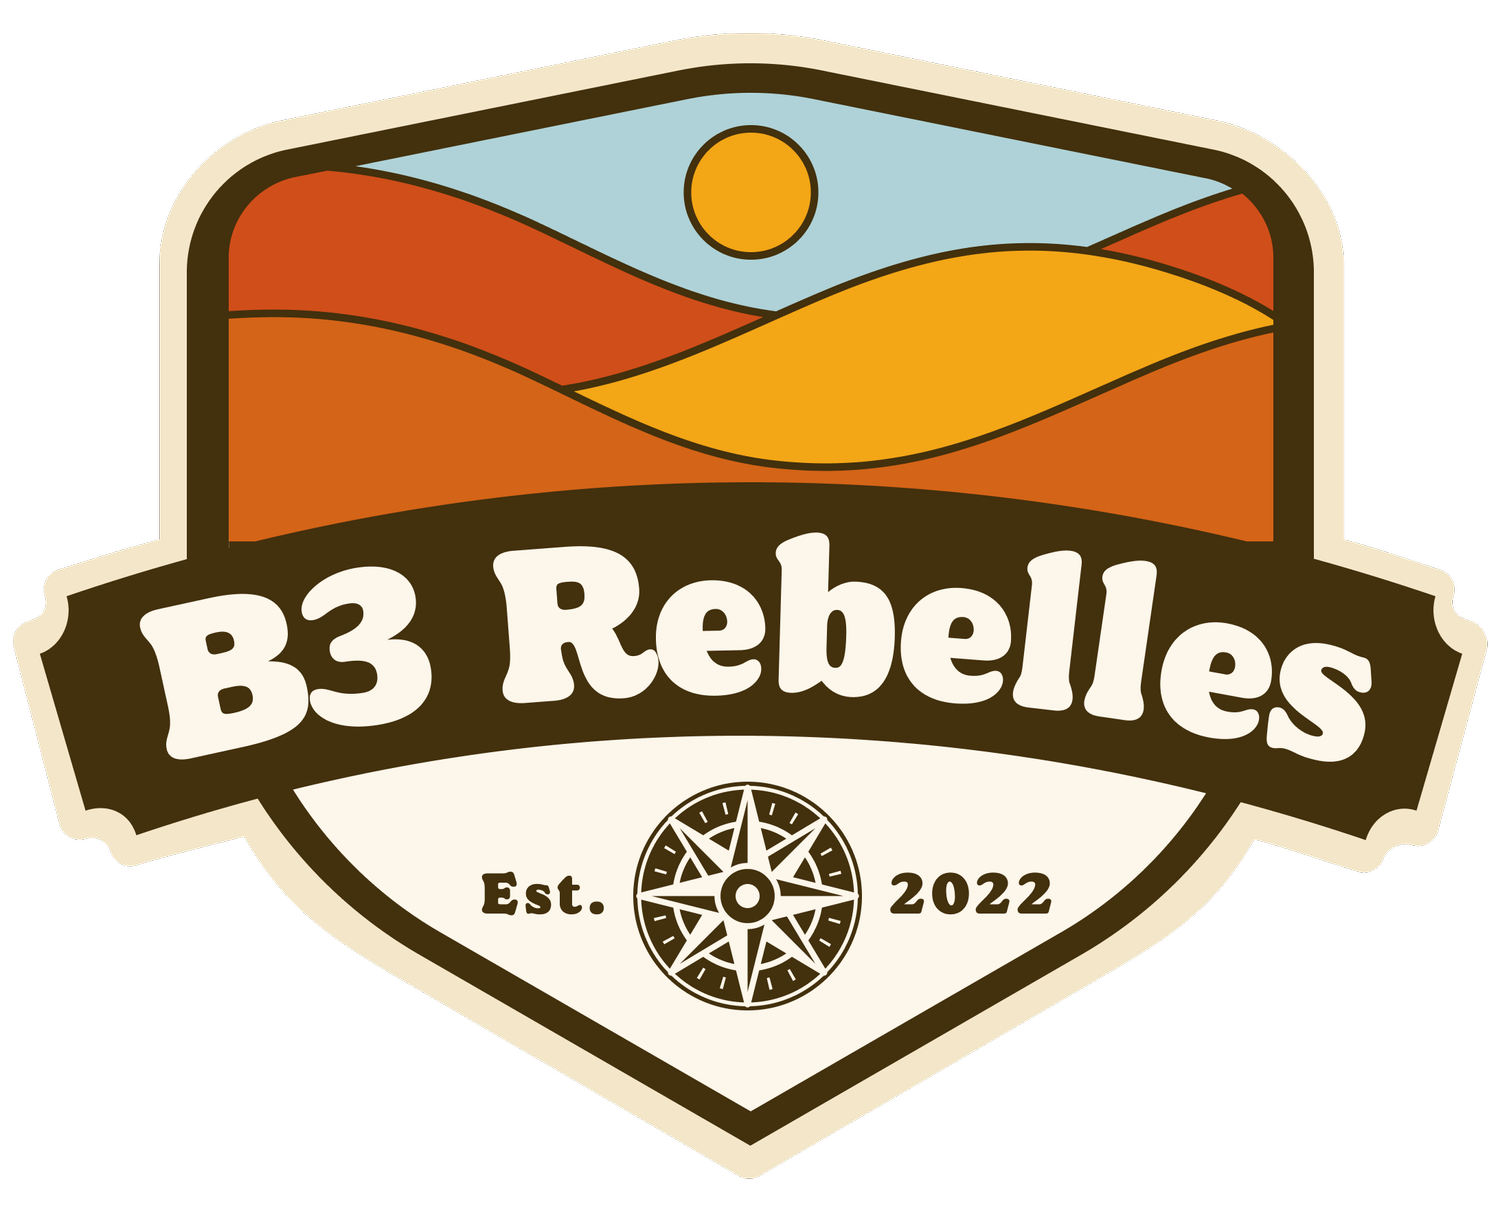 The B3 Rebelles